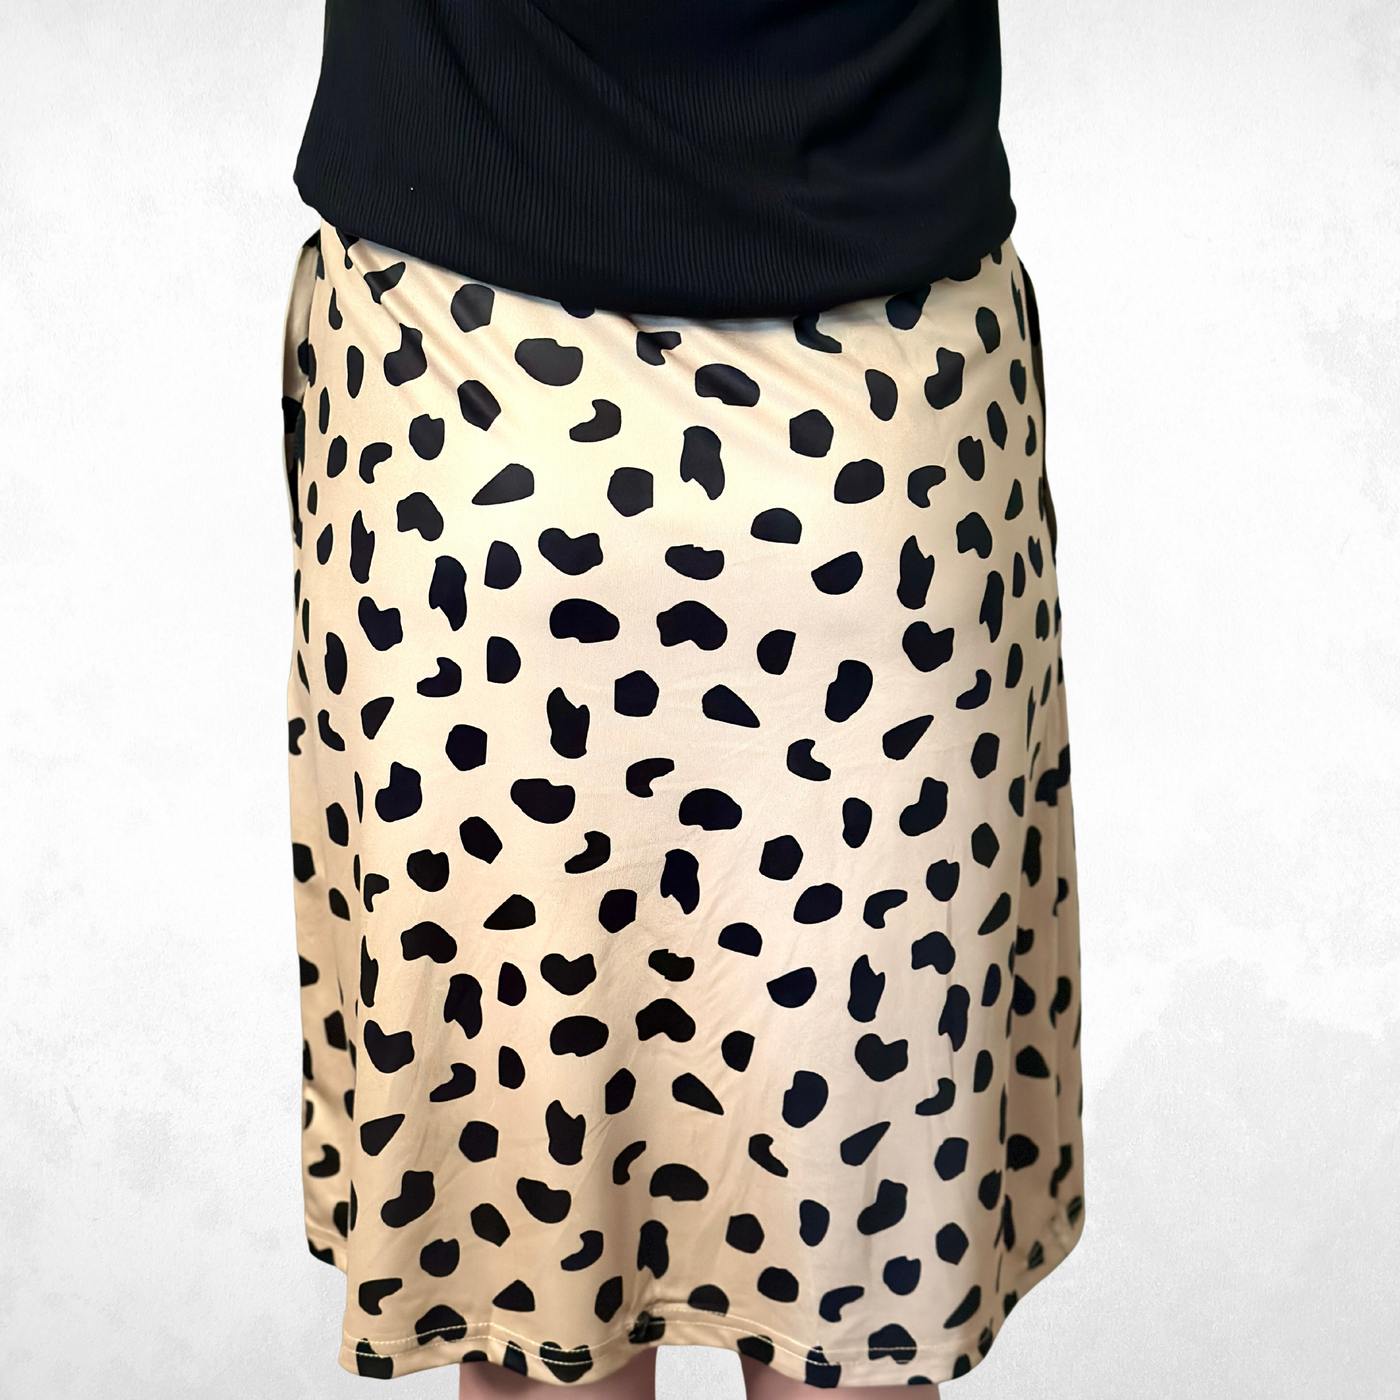 The Cheetah - MOD Sportswear